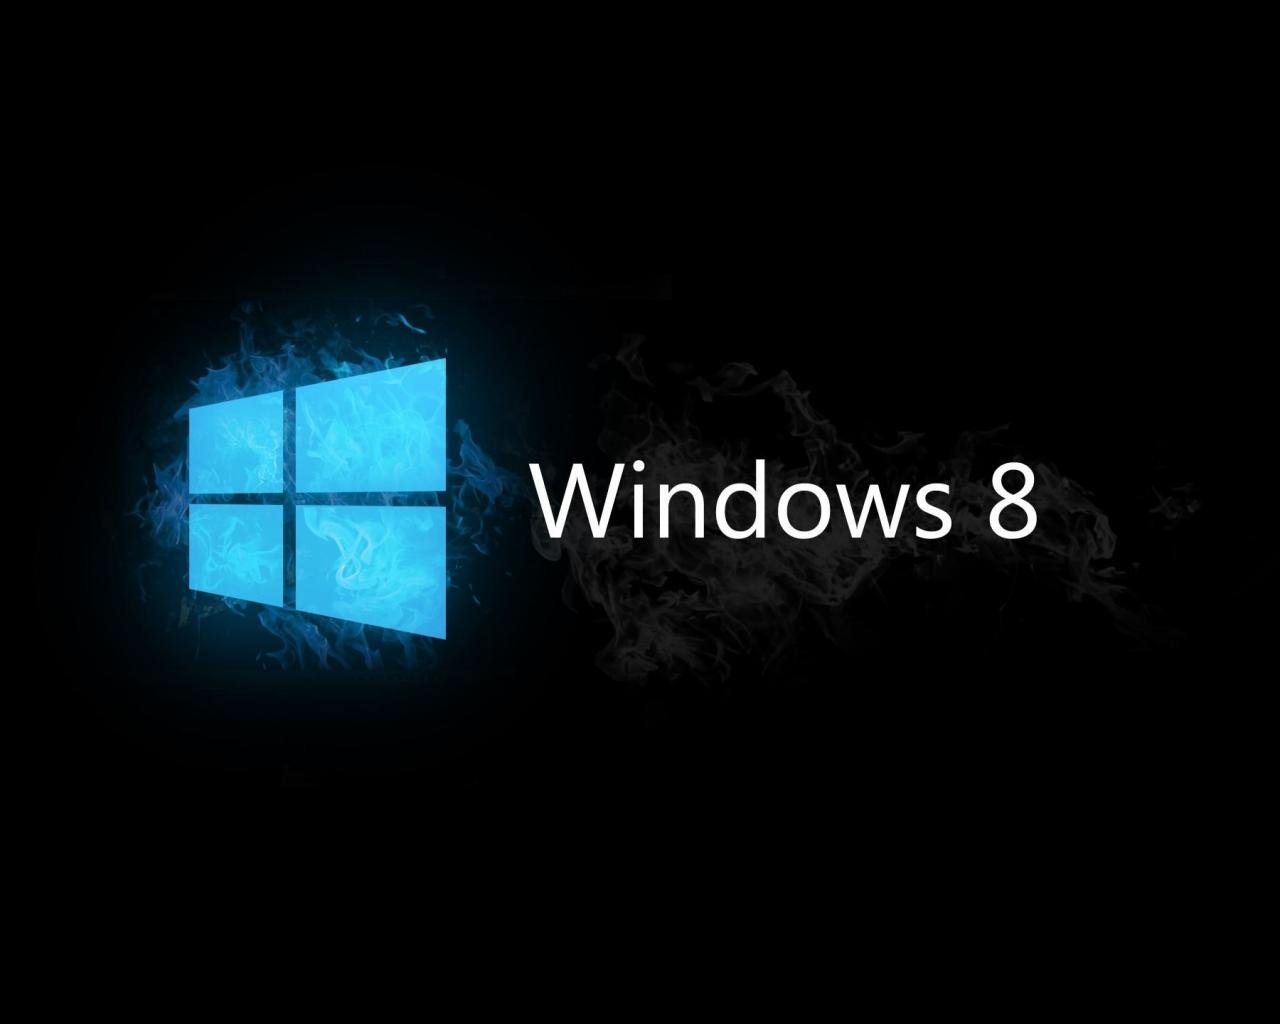 Windows 8 Logo Wallpaper 1280x1024 Download wallpapers page